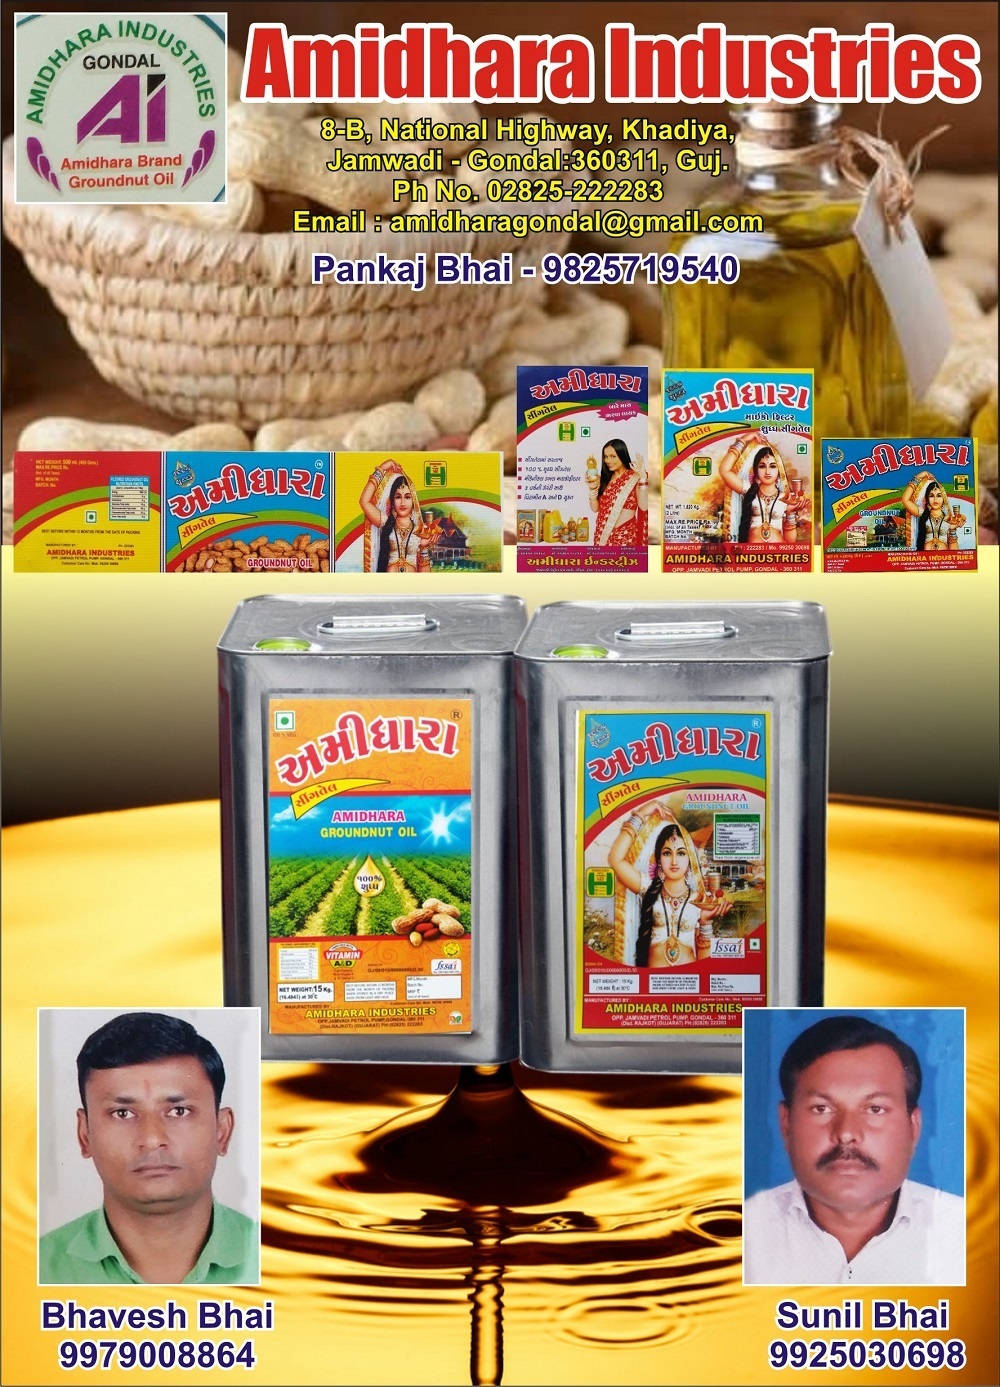 Amidhara Industries - Groundnut Oil